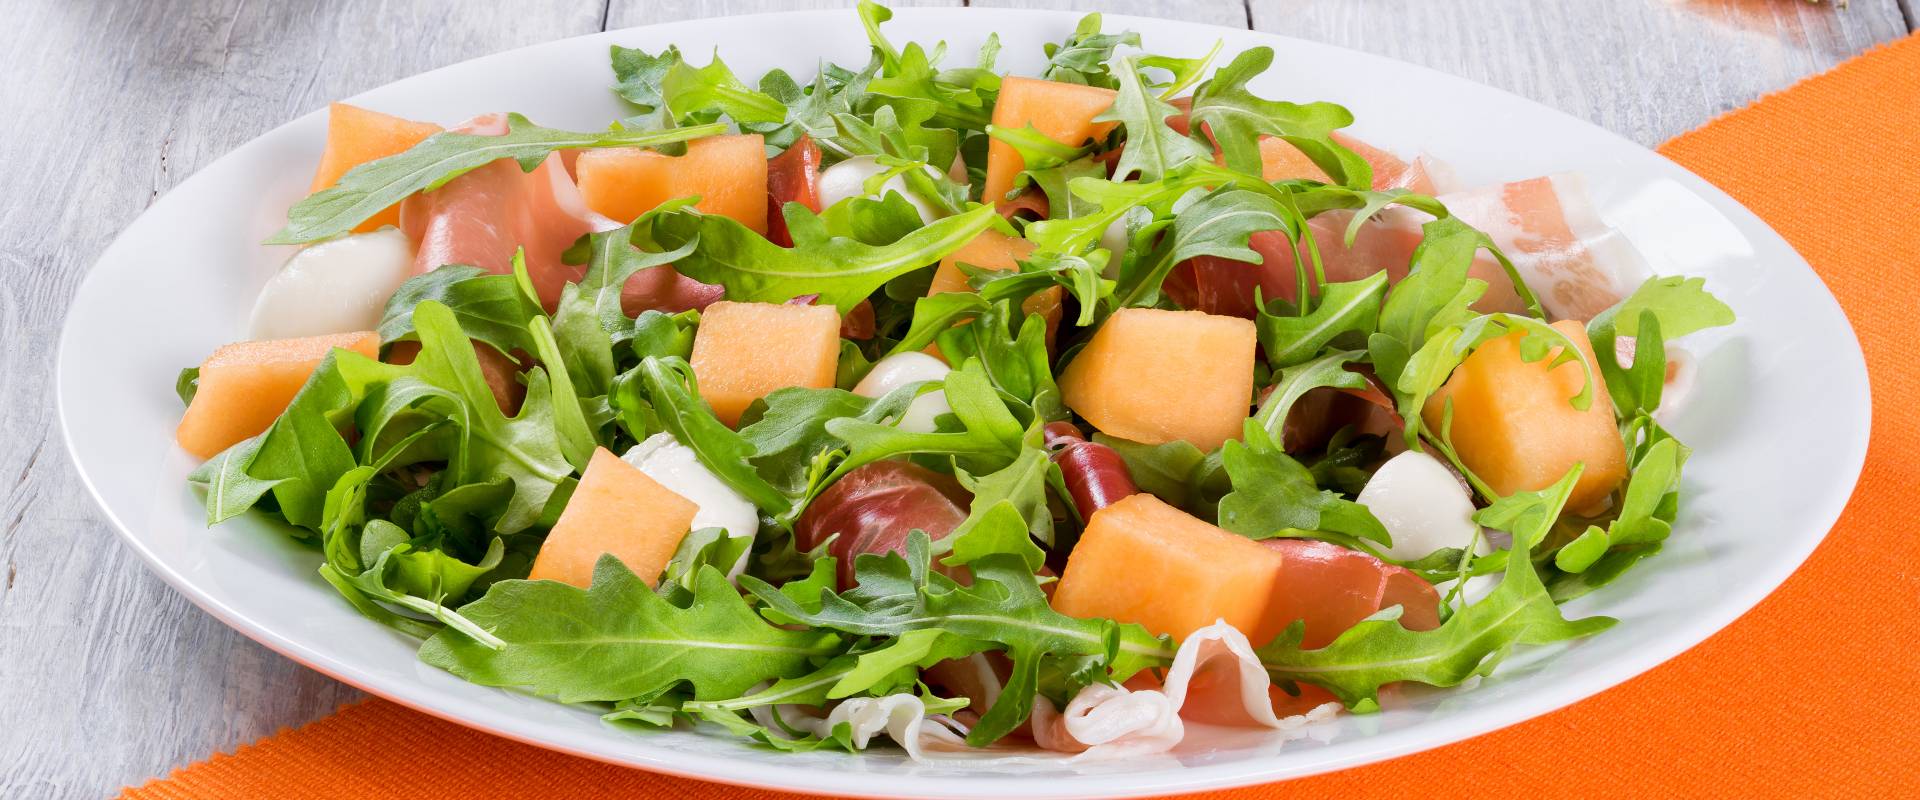 sargadinnye-salata